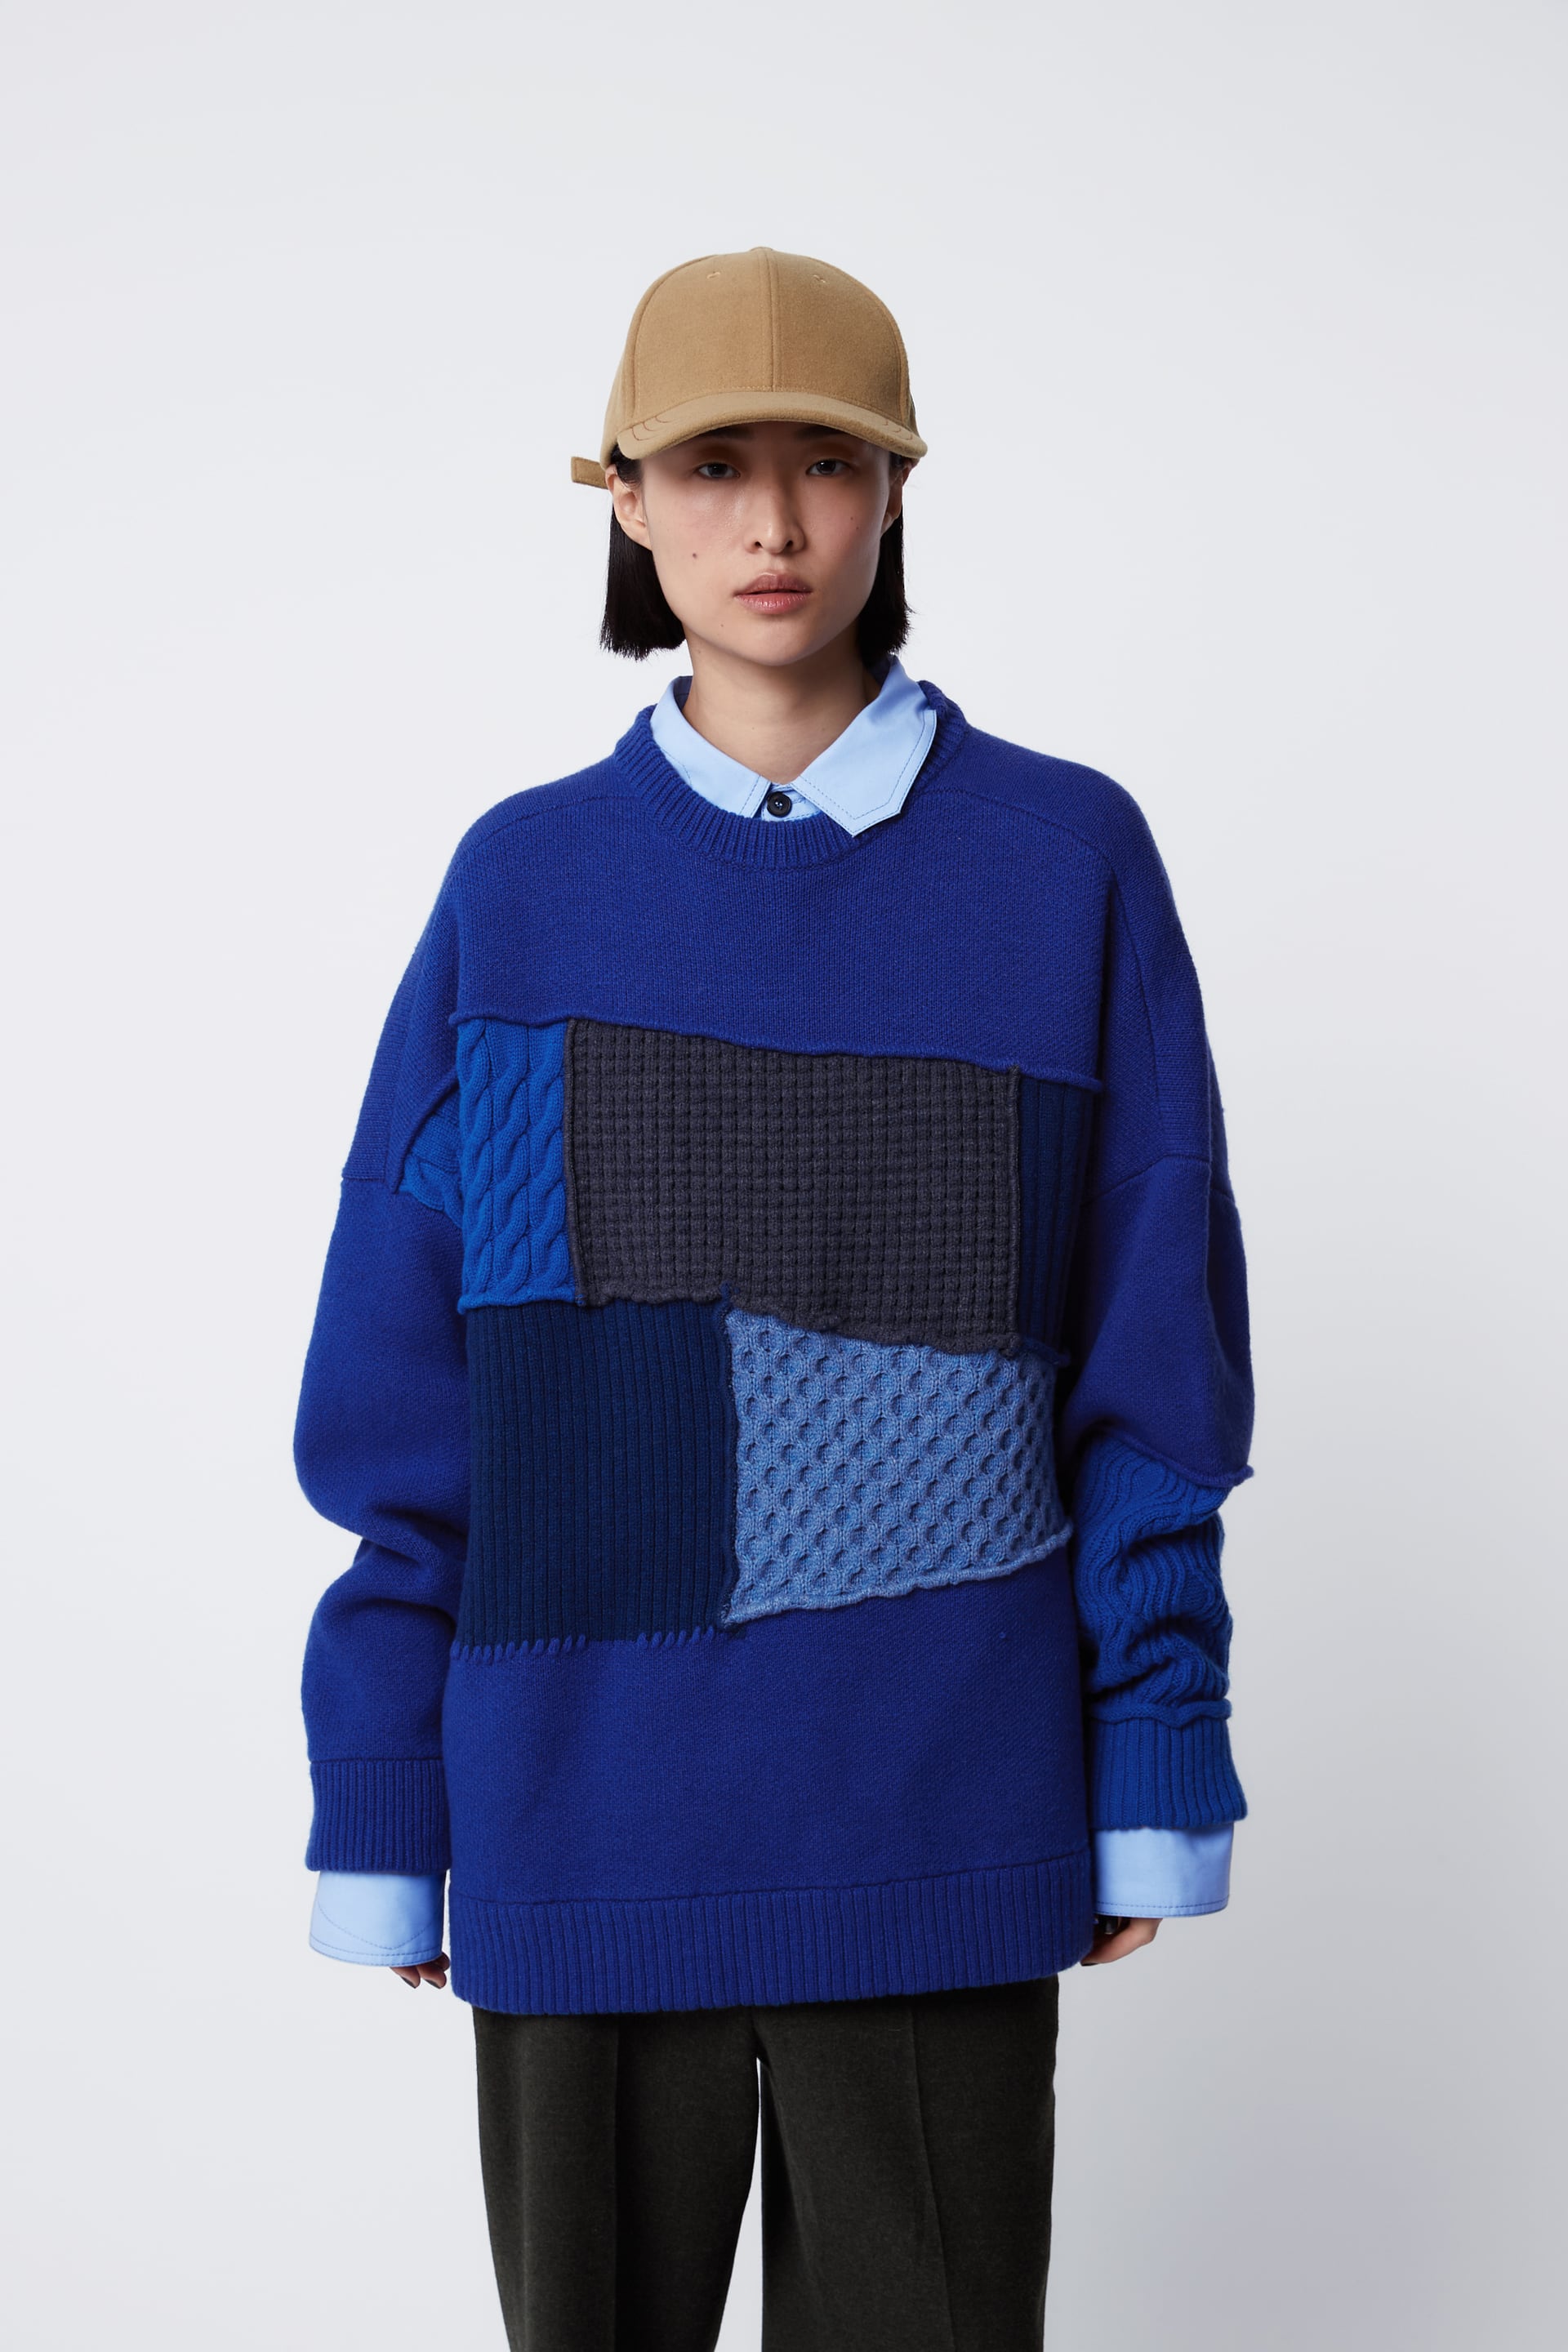 ADERERROR オーバーサイズ パッチワークセーター - ブルー | ZARA Japan / 日本